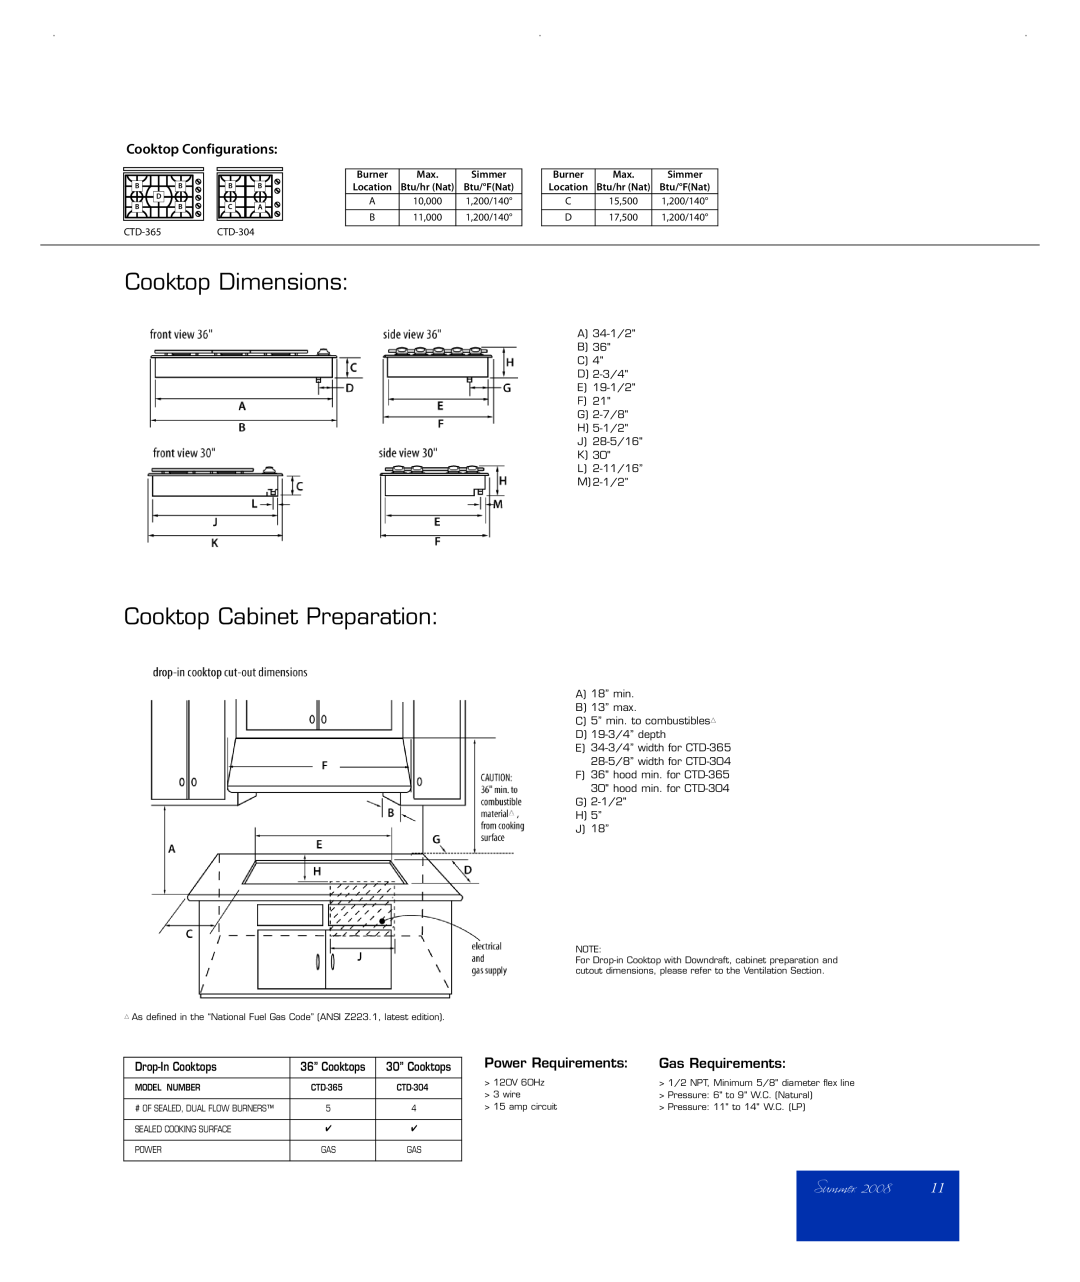 DCS ICDI Summer, Cooktop Dimensions, Cooktop Cabinet Preparation, Cooktop Configurations, Power Requirements, 36” Cooktops 